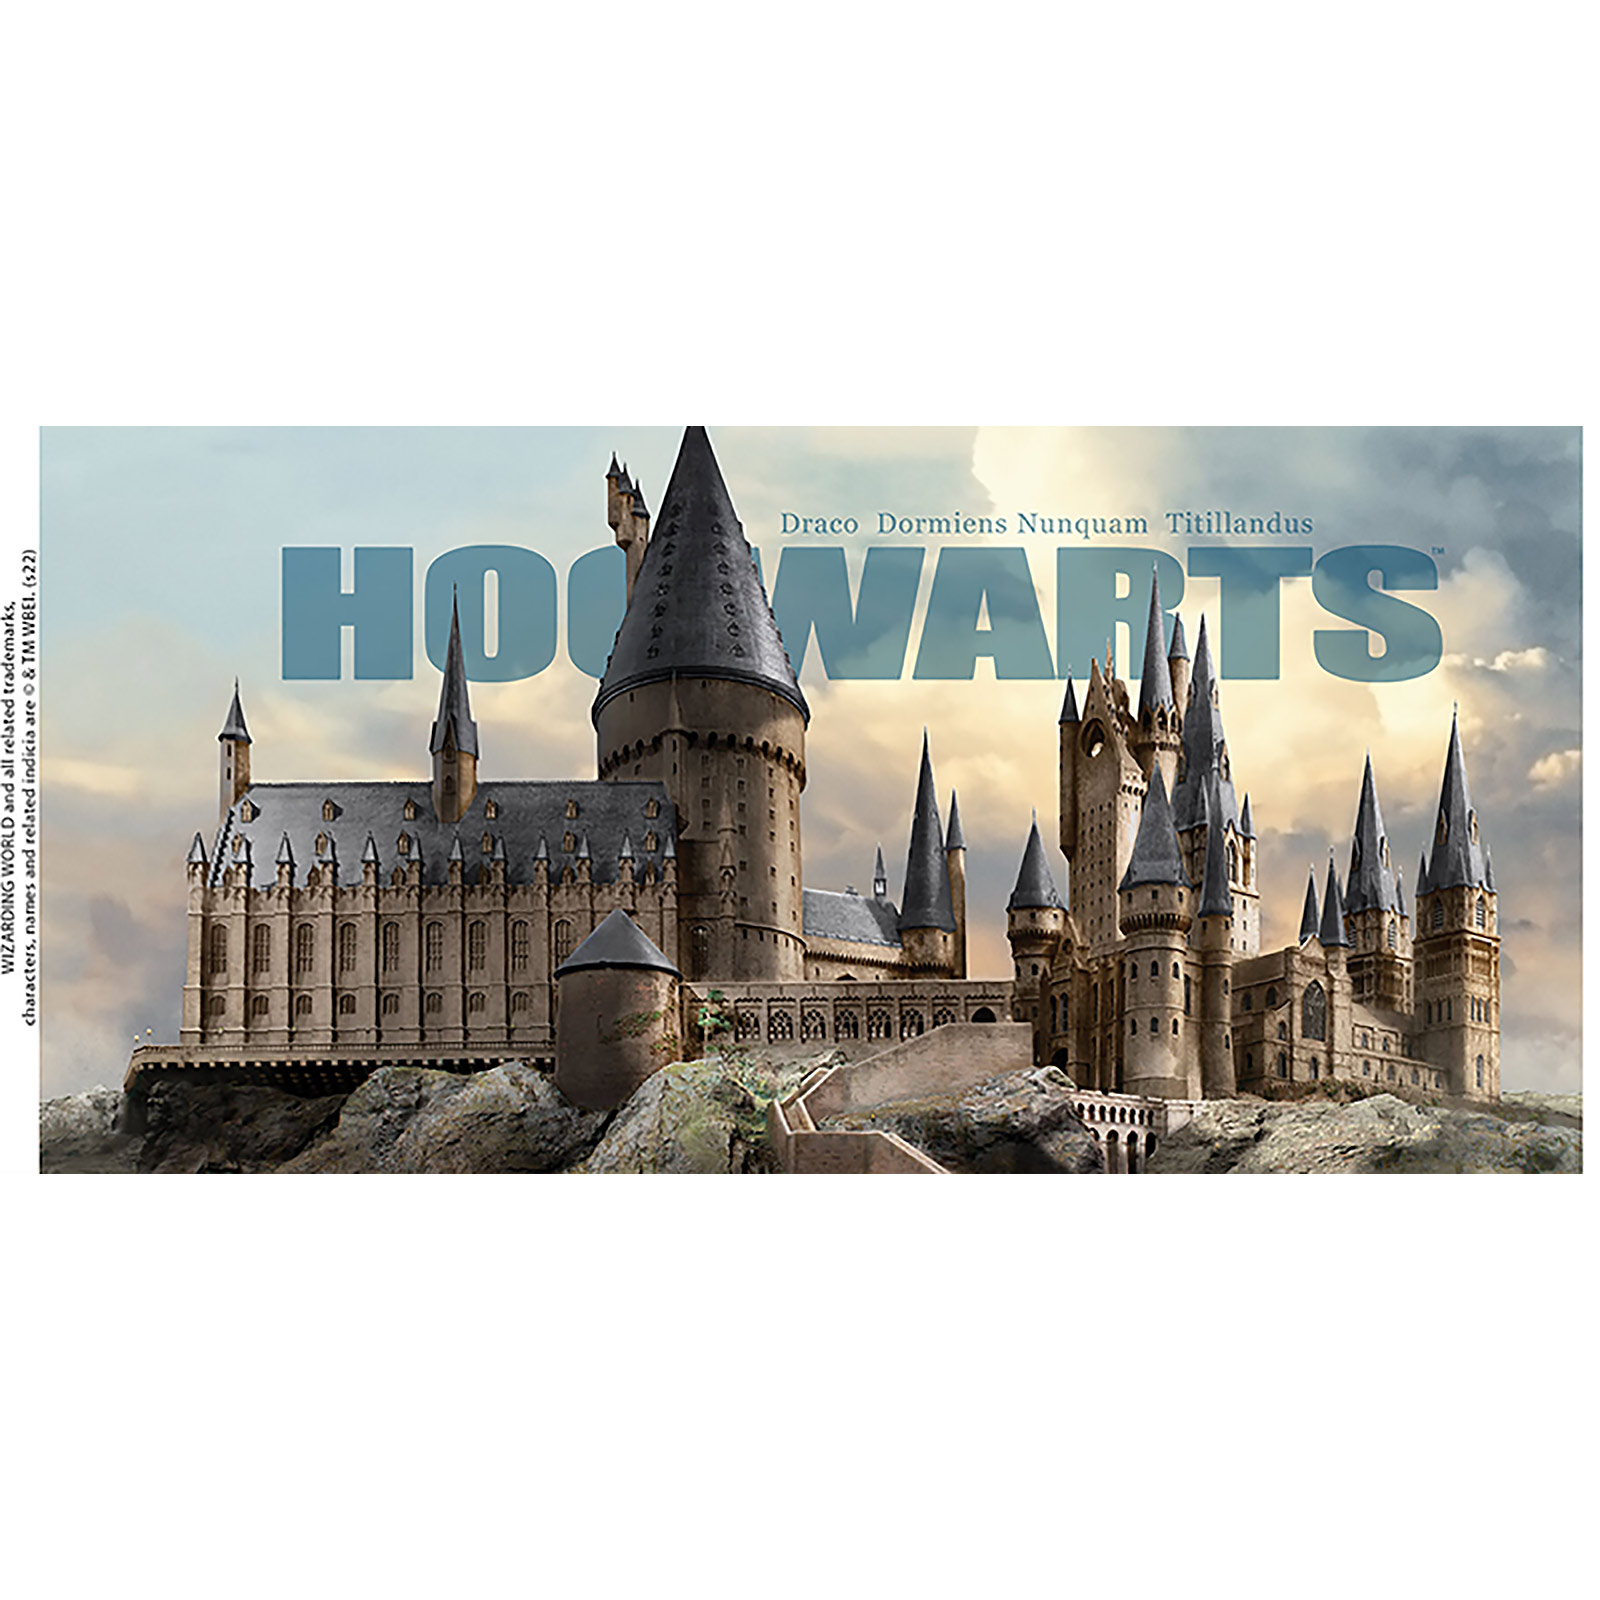 Hogwarts Mug - Fantastic Beasts